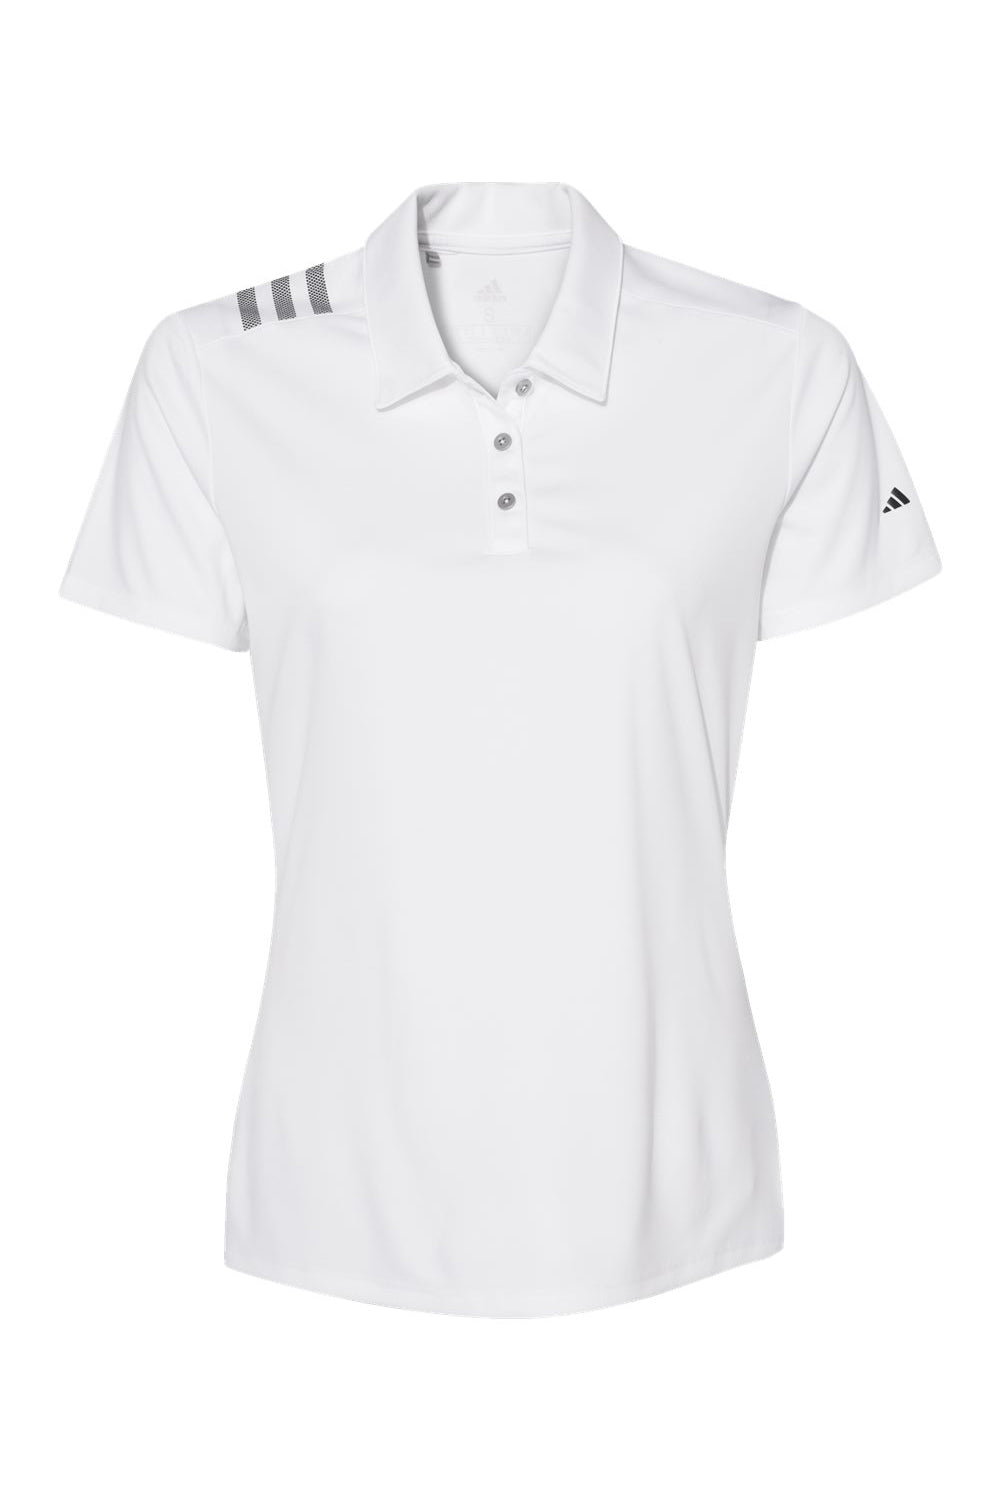 Adidas A325 Womens 3 Stripes Short Sleeve Polo Shirt White/Black Flat Front